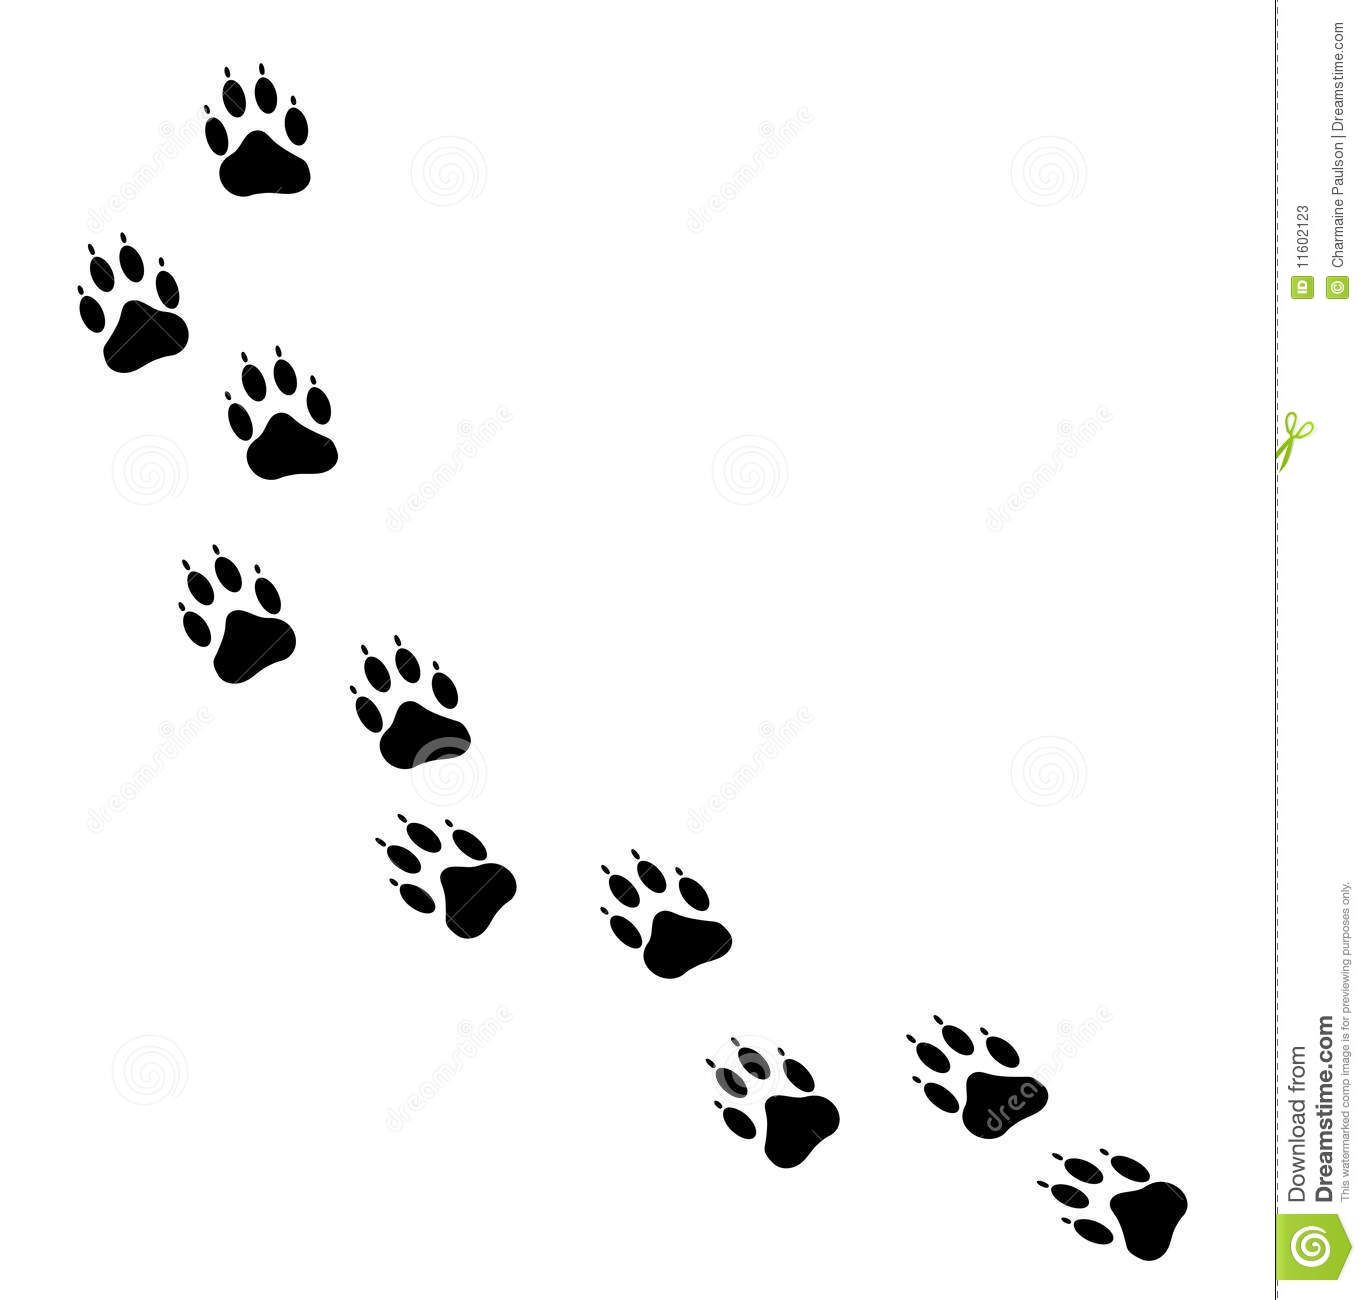 Graphic Illustration Of Dog Paw Tracks Across The Image